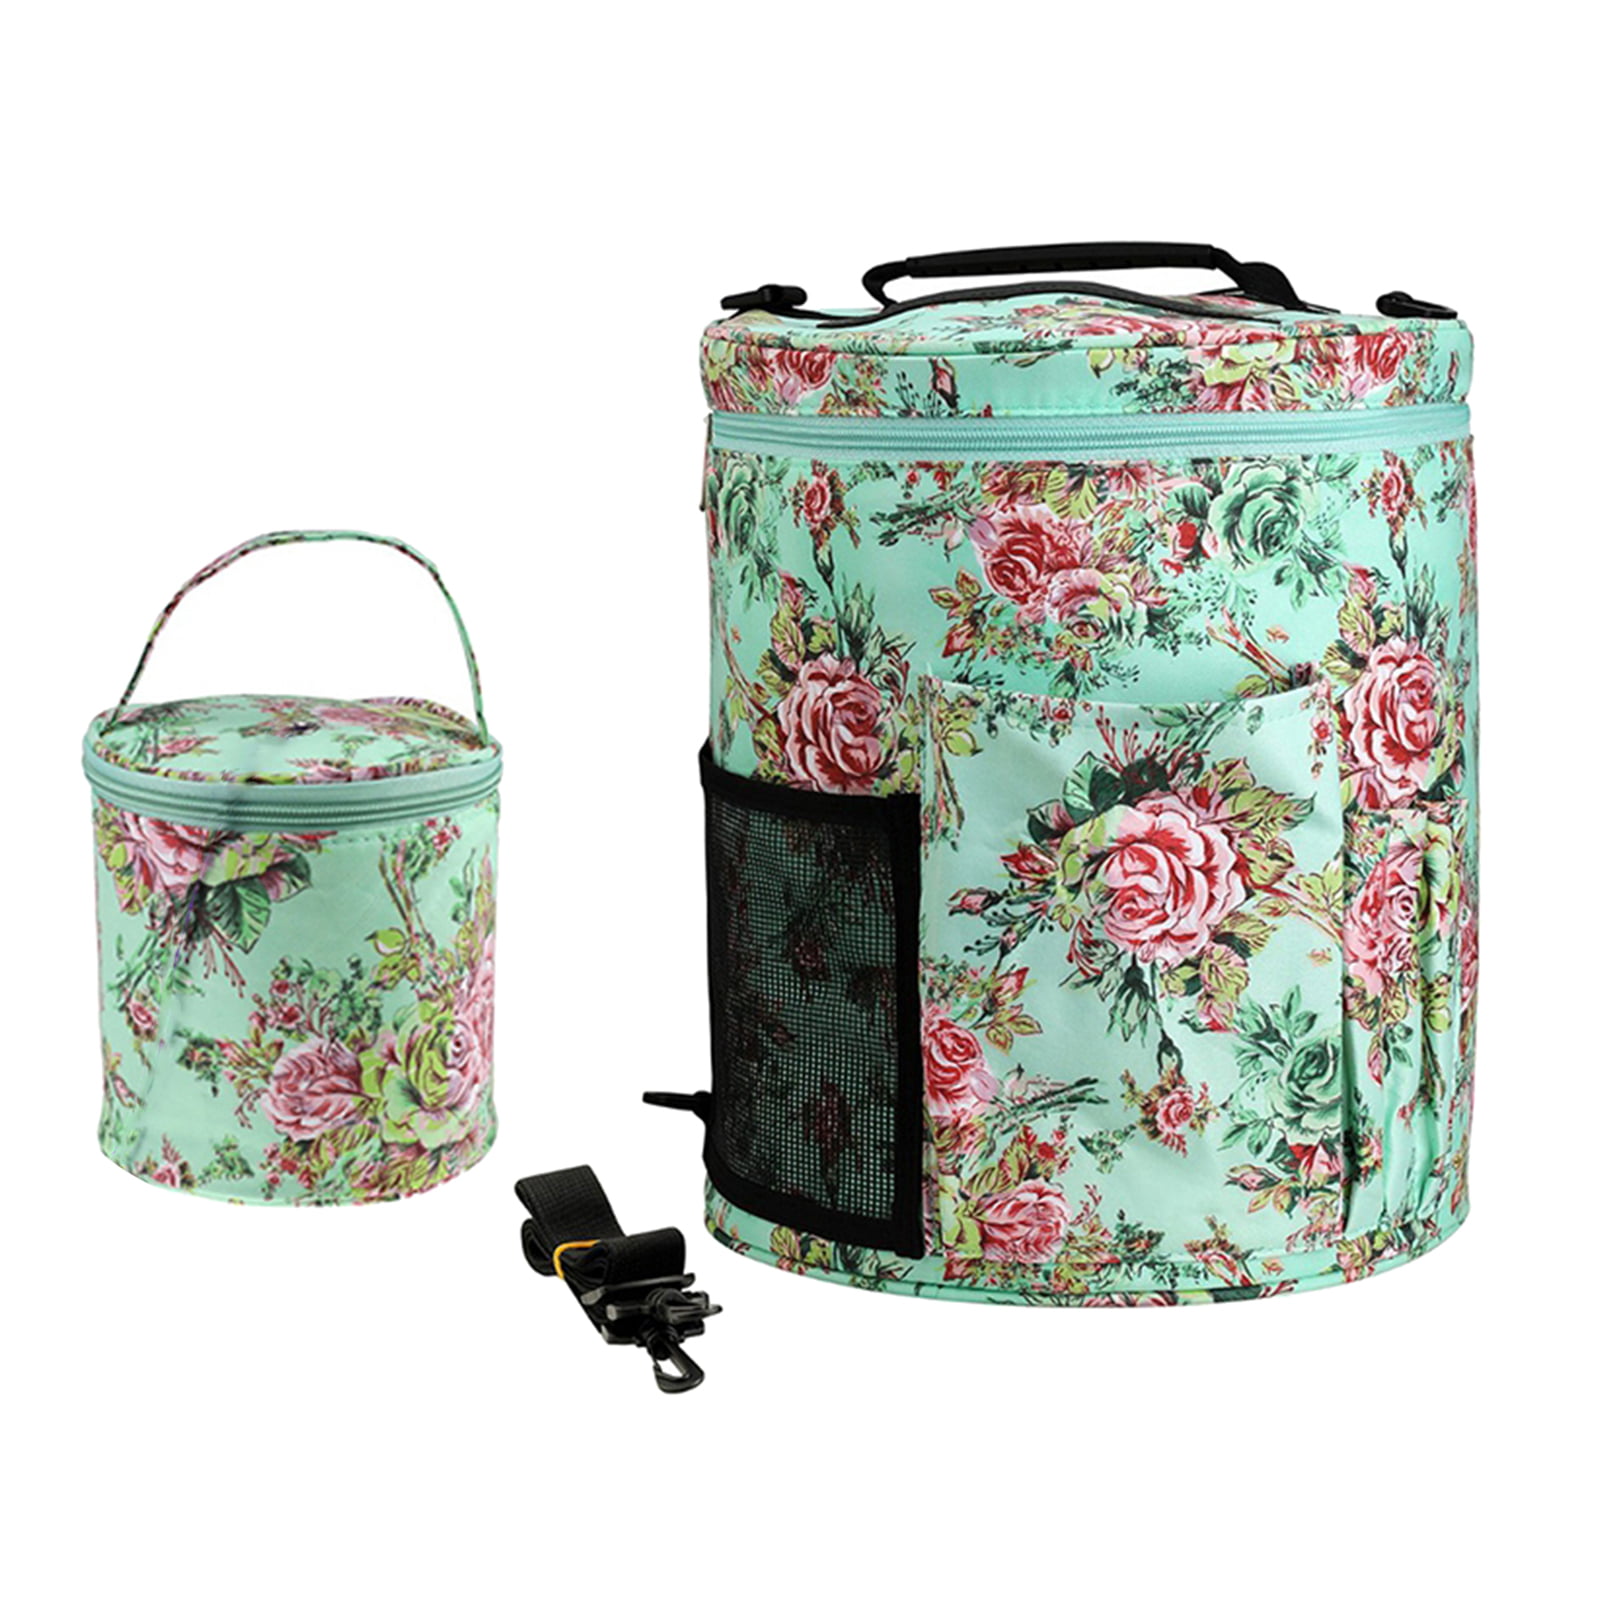 Canvas Storage Bag for KnitIQ Blocking Mats - Artisan Design